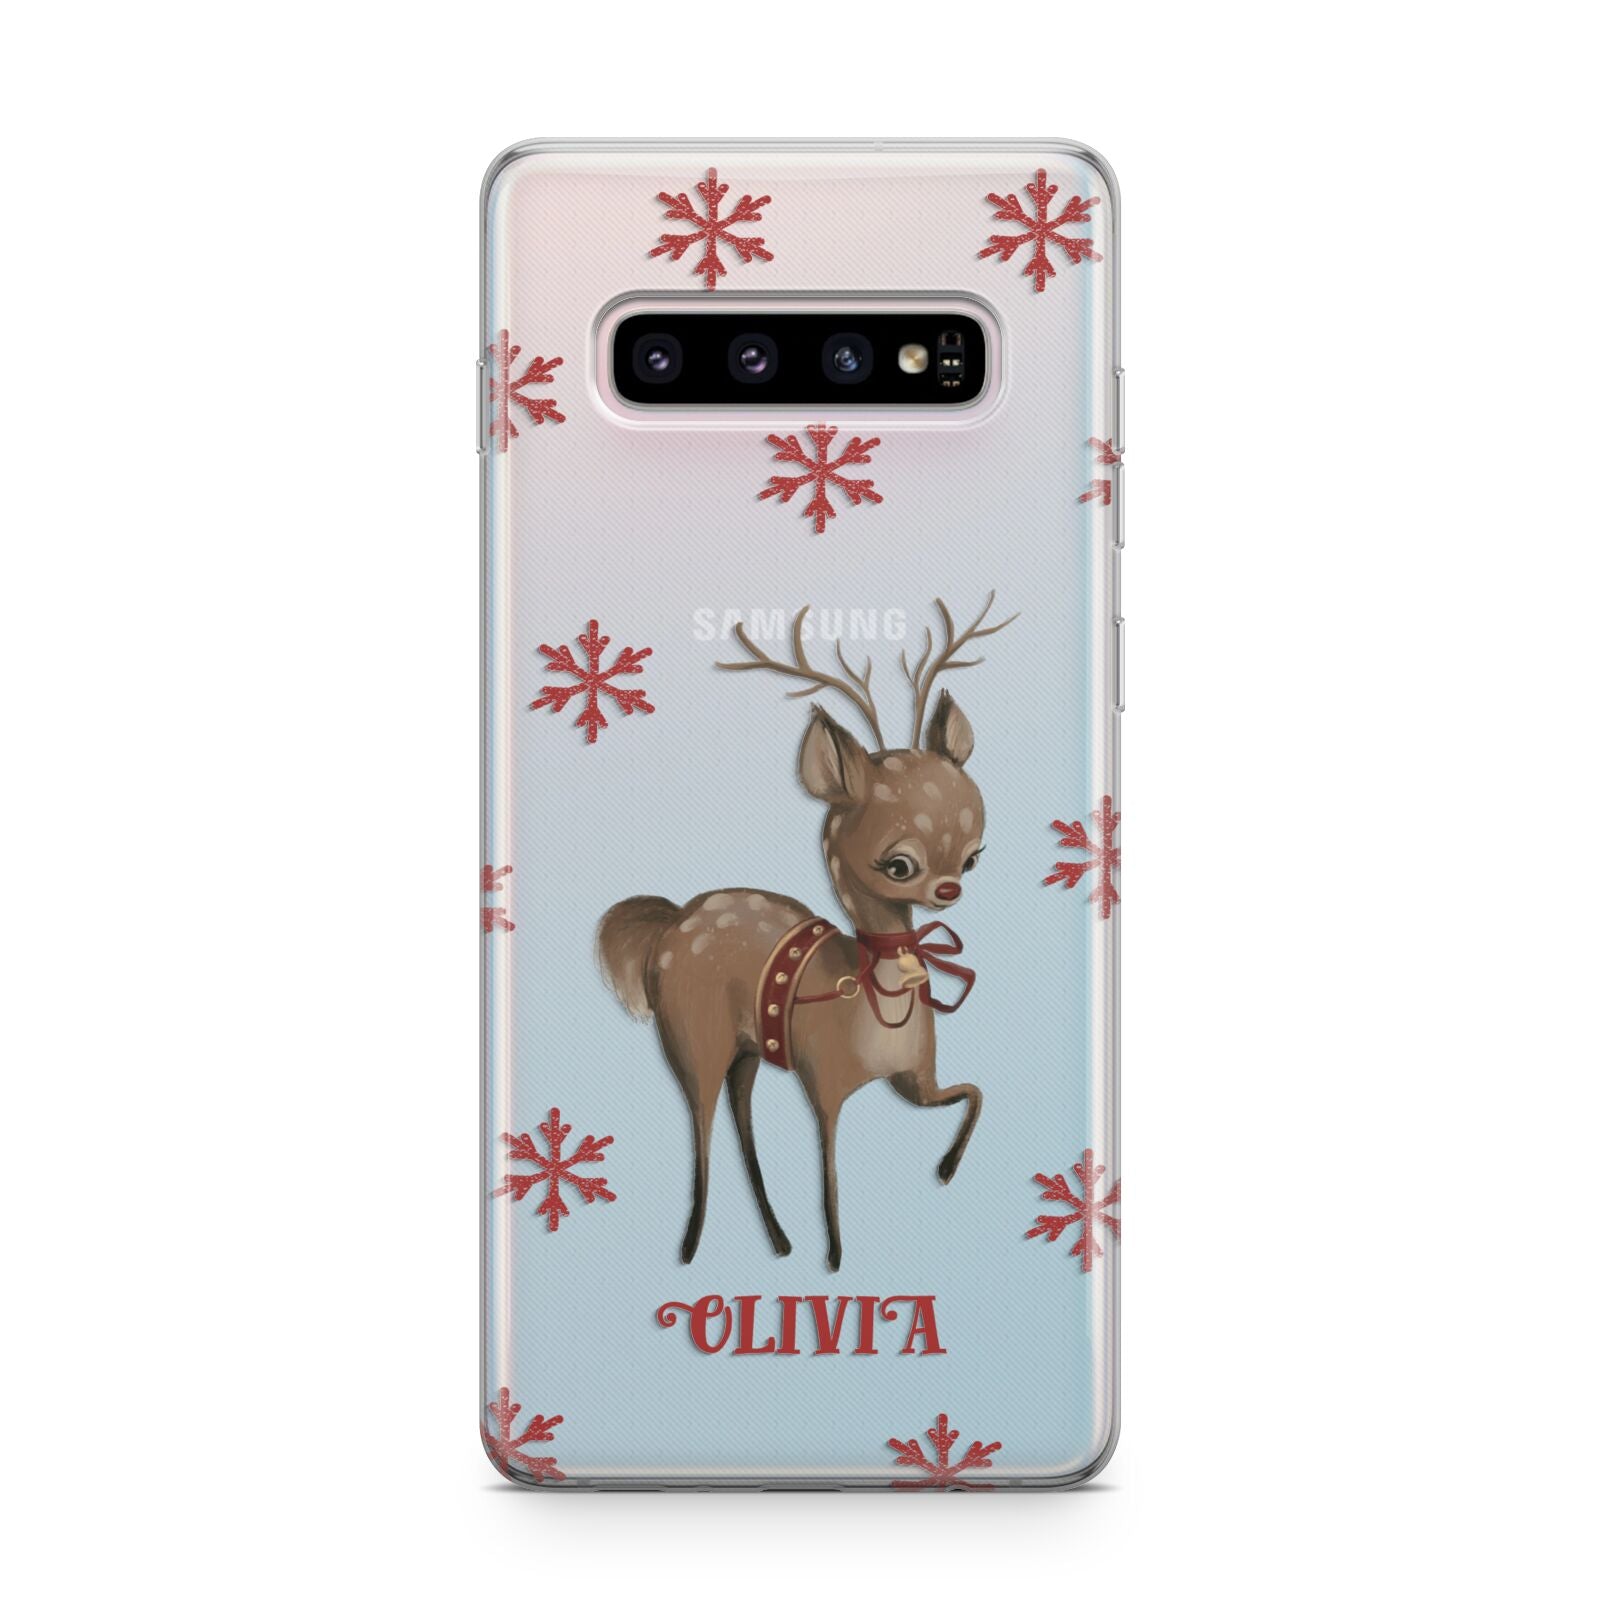 Rudolph Delivery Samsung Galaxy S10 Plus Case